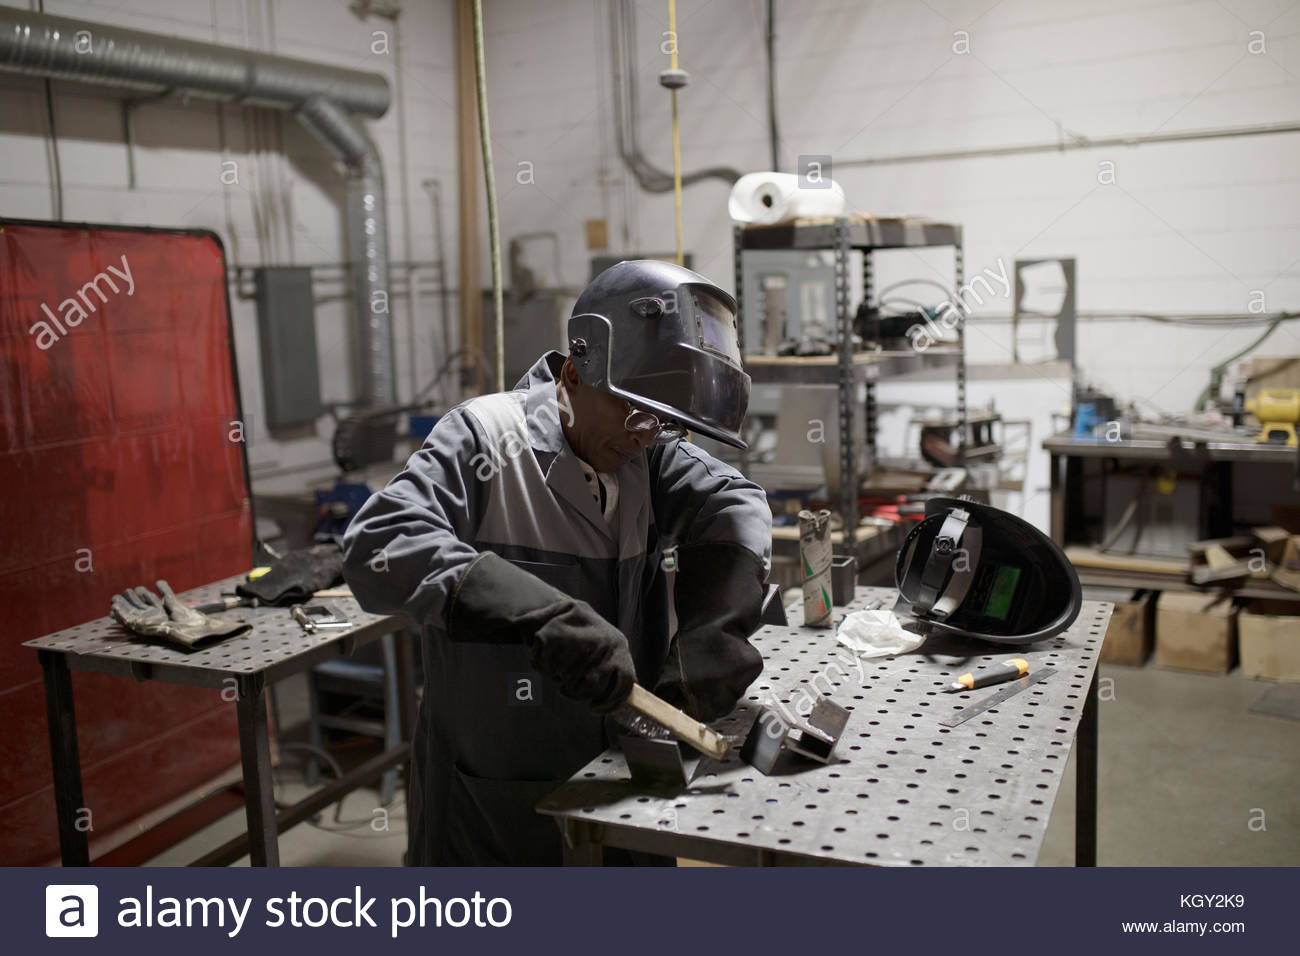 Welder in welding mask working at workbench Stock Photo